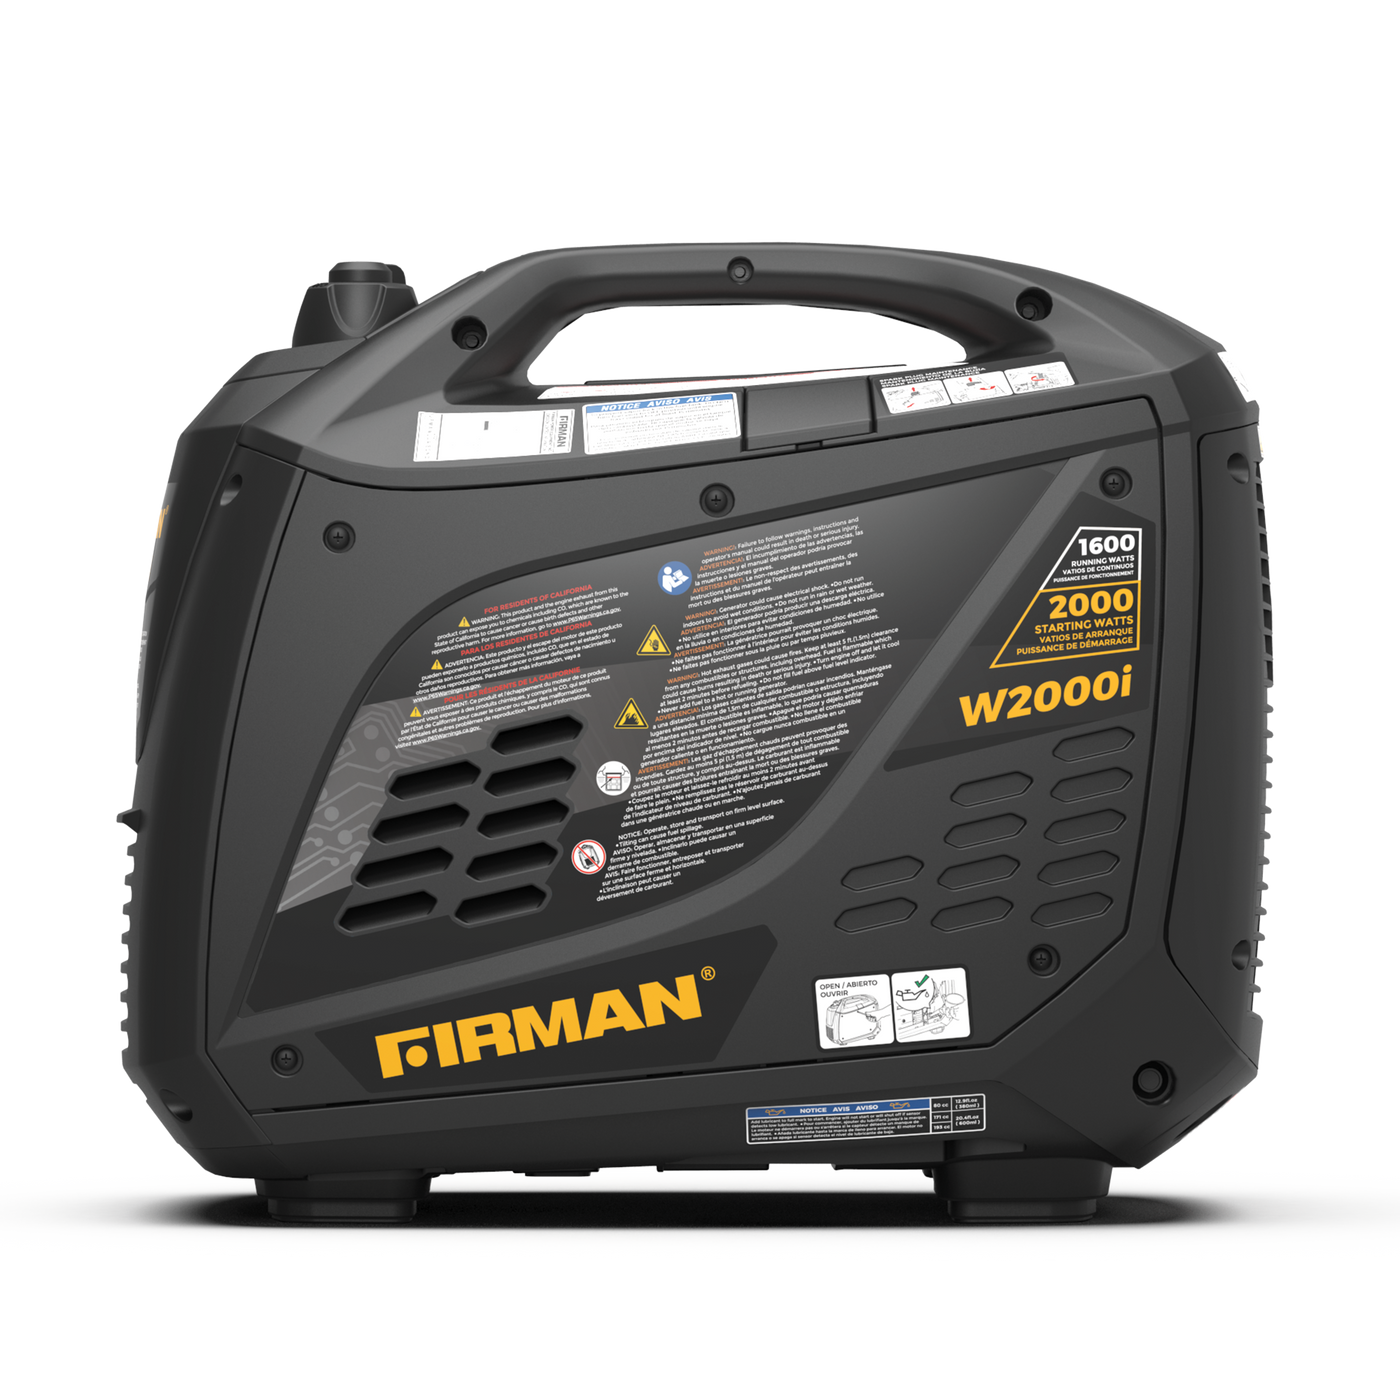 Inverter Portable Generator 2000/1600W Recoil Start – FIRMAN Power Equipment